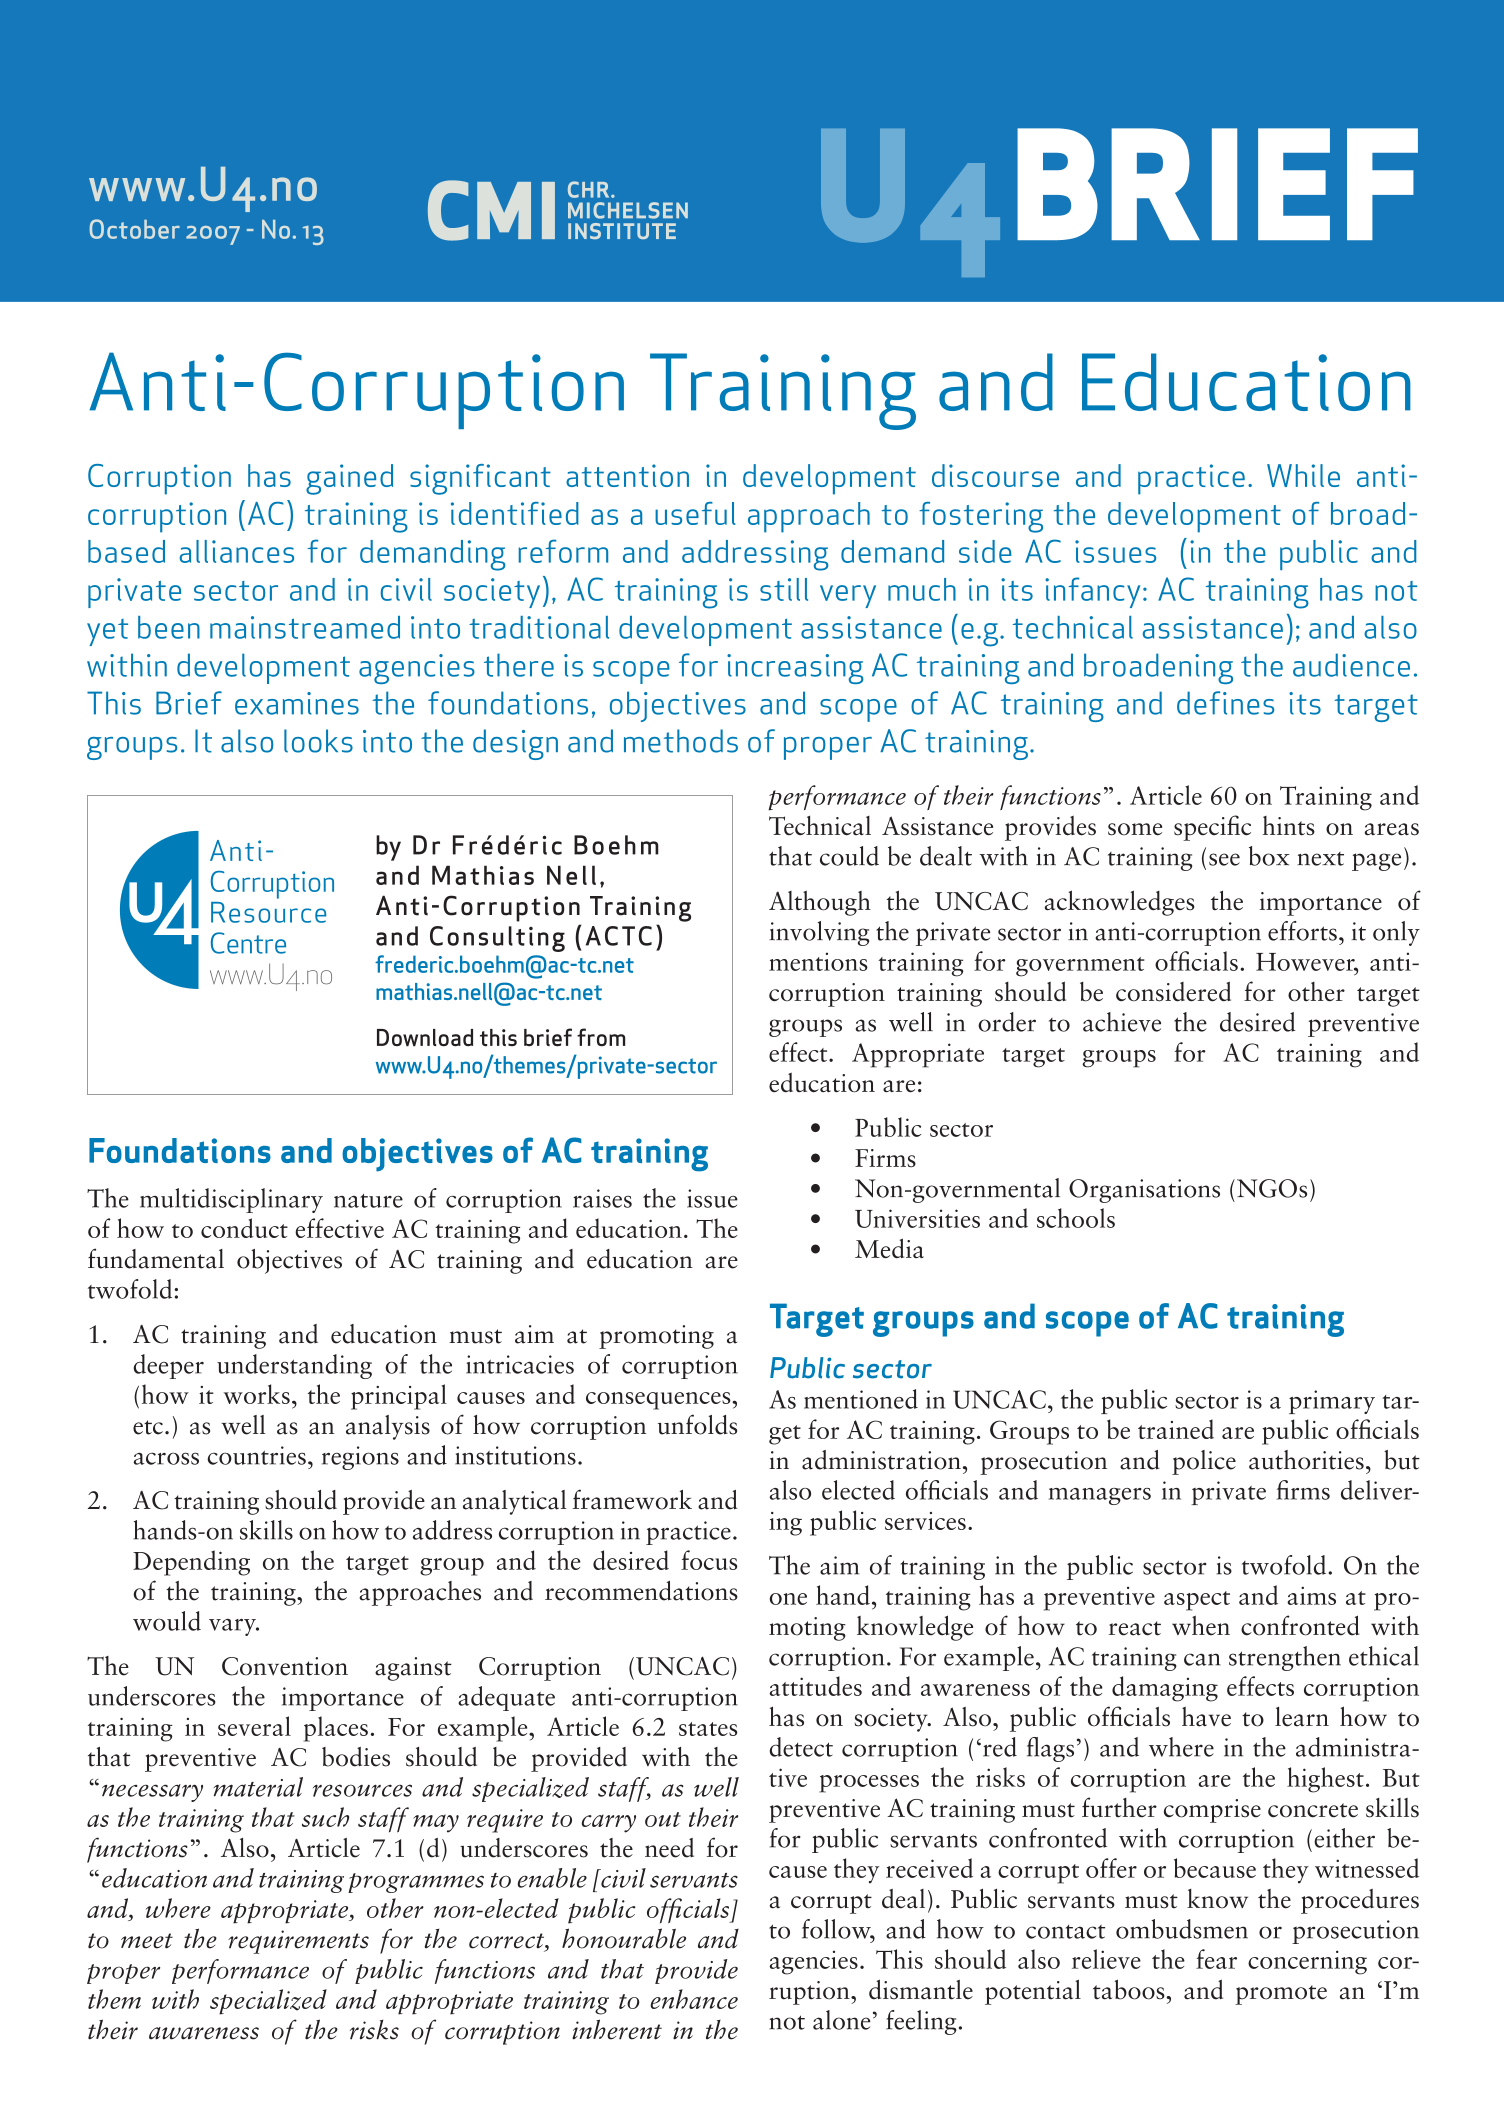 Anti-corruption training and education